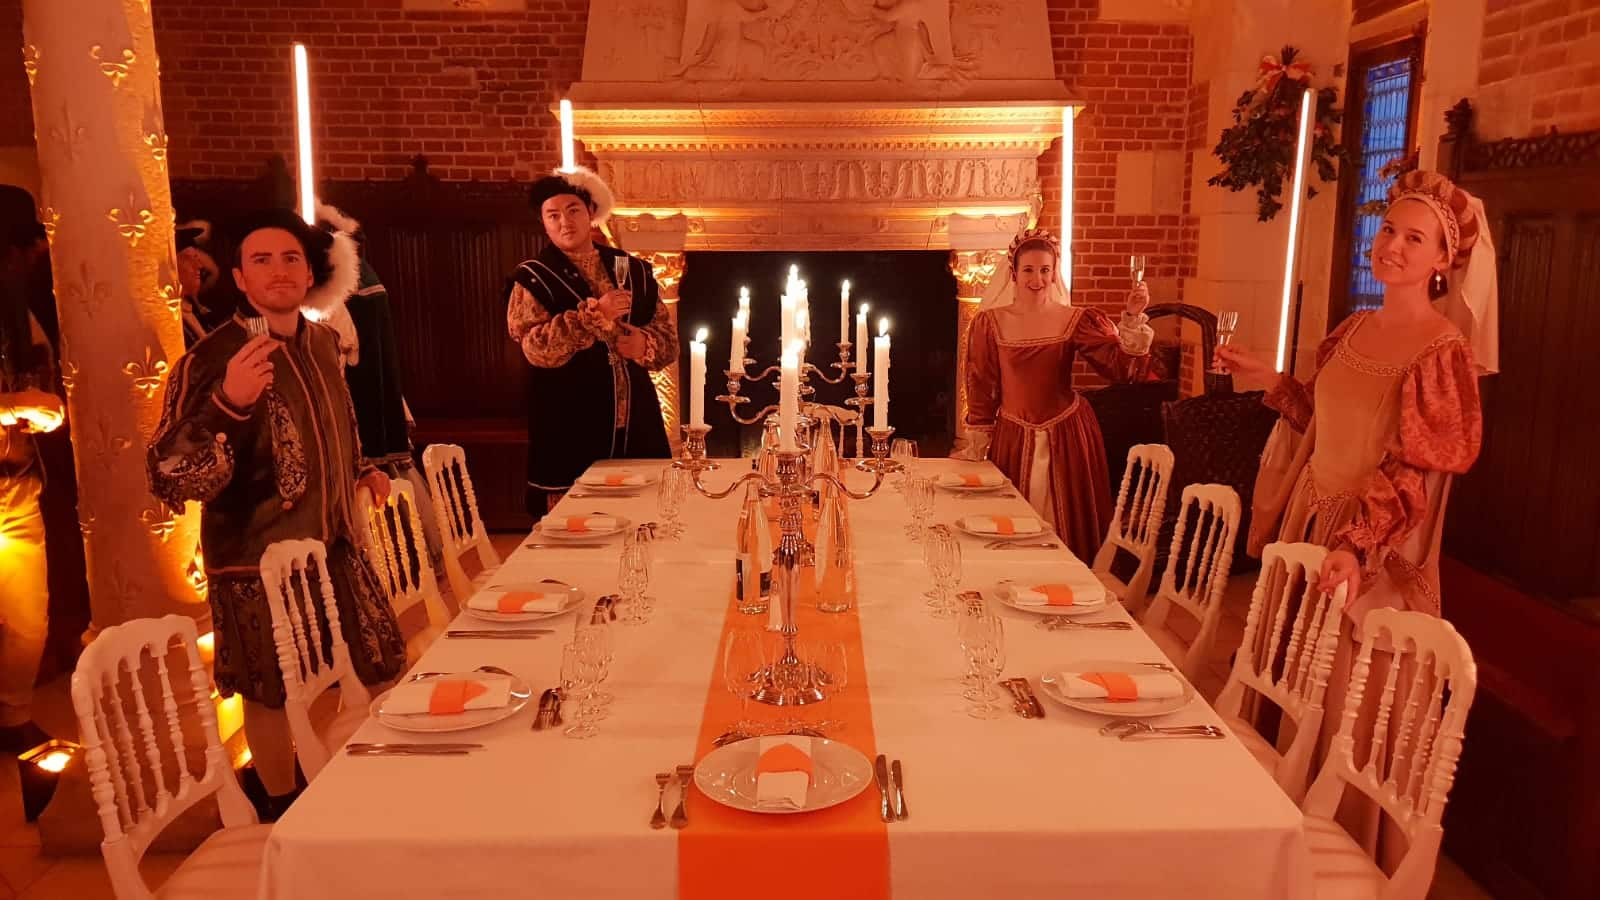 diner leboncoin wato we are the oracle evenementiel soiree tours chateau amboise table foulques jubert iris de rode hyomi legendre cheminee